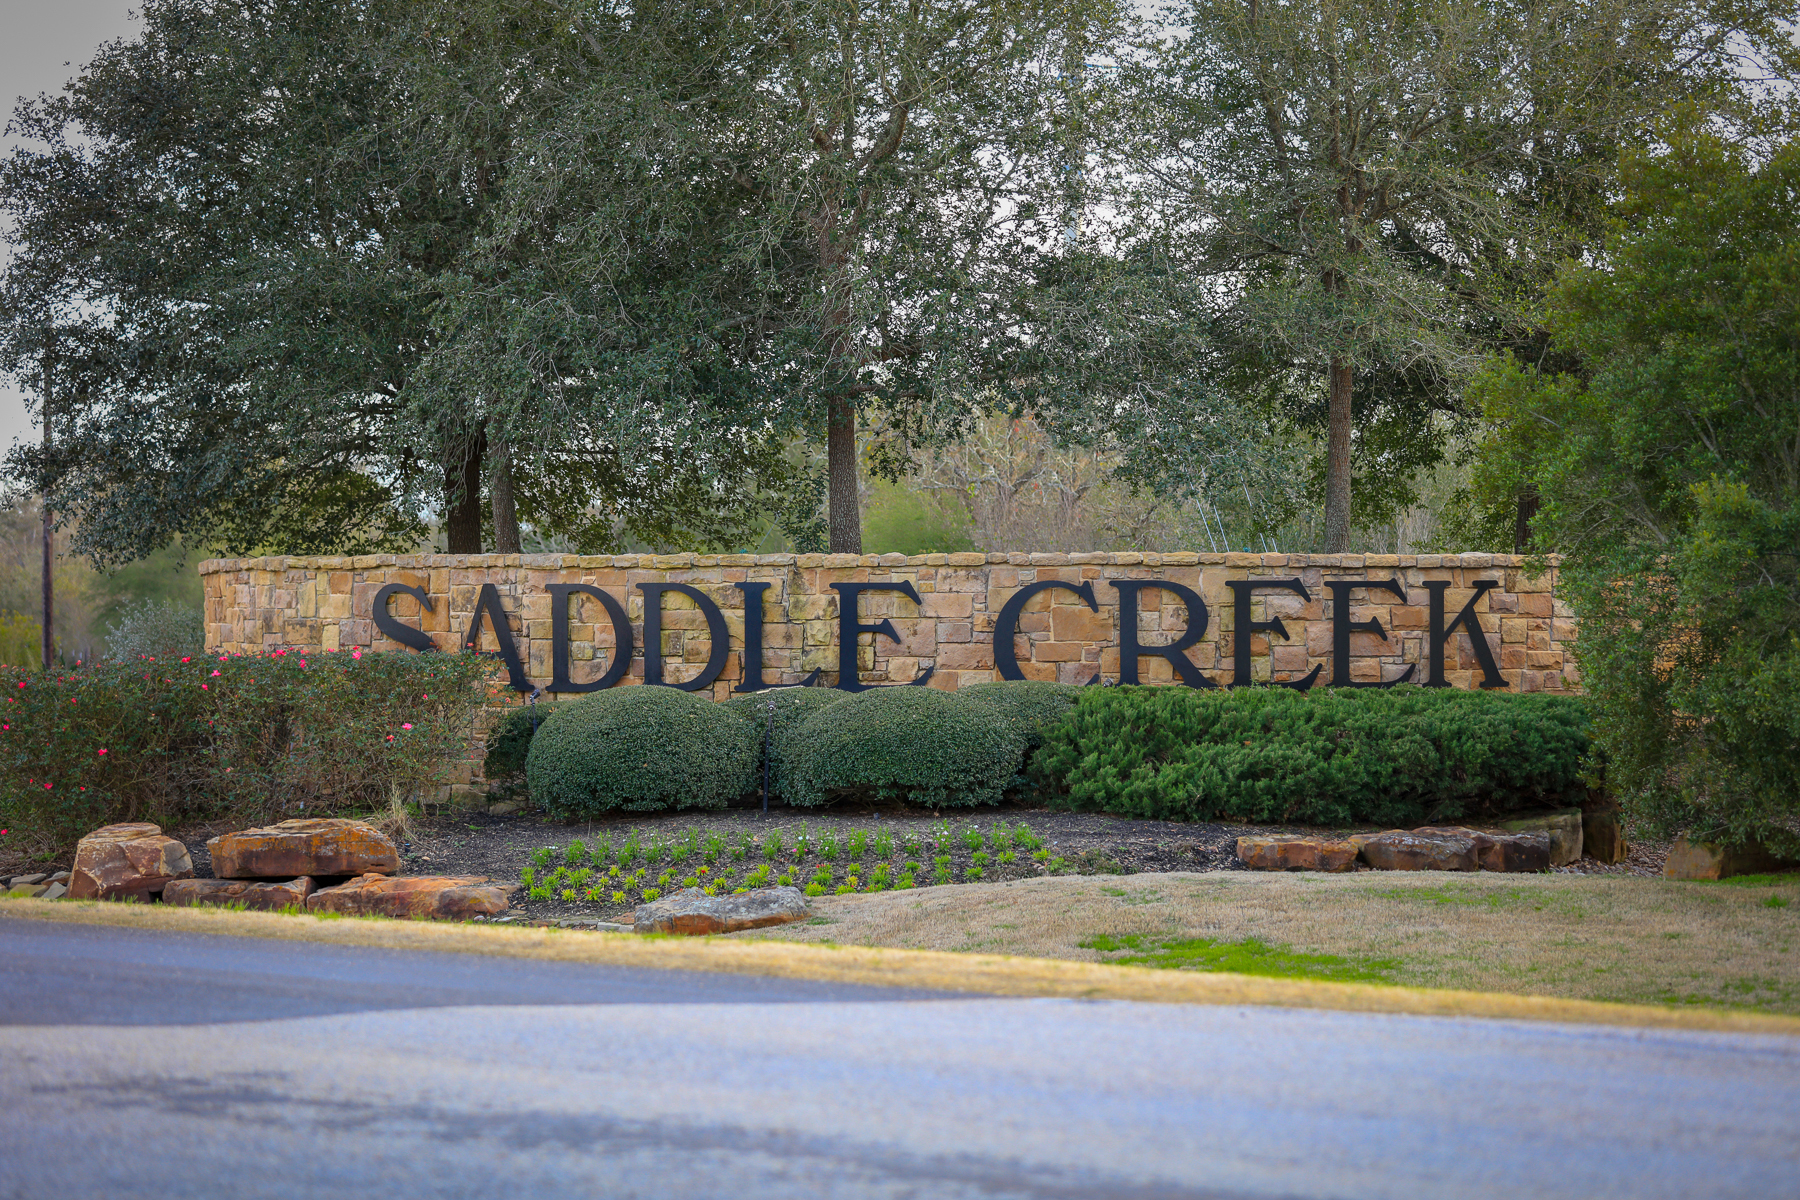 Saddle Creek